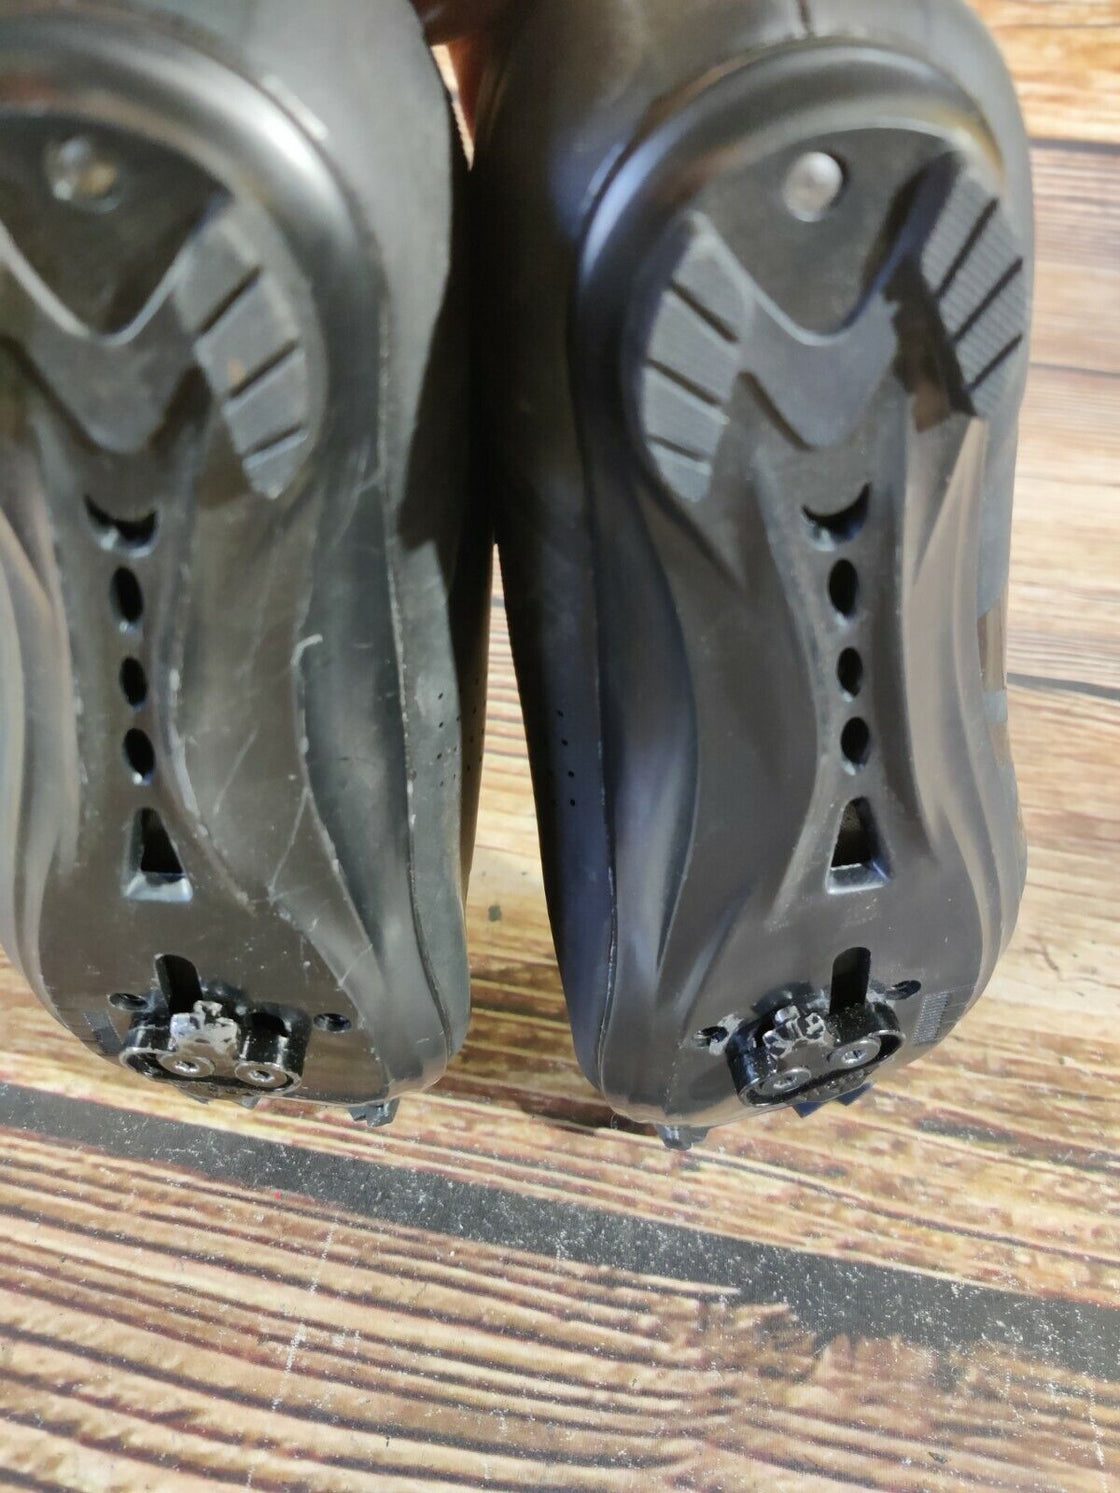 ENDURANCE Road Cycling Shoes Biking Boots 3 Bolts Size EU39, US7